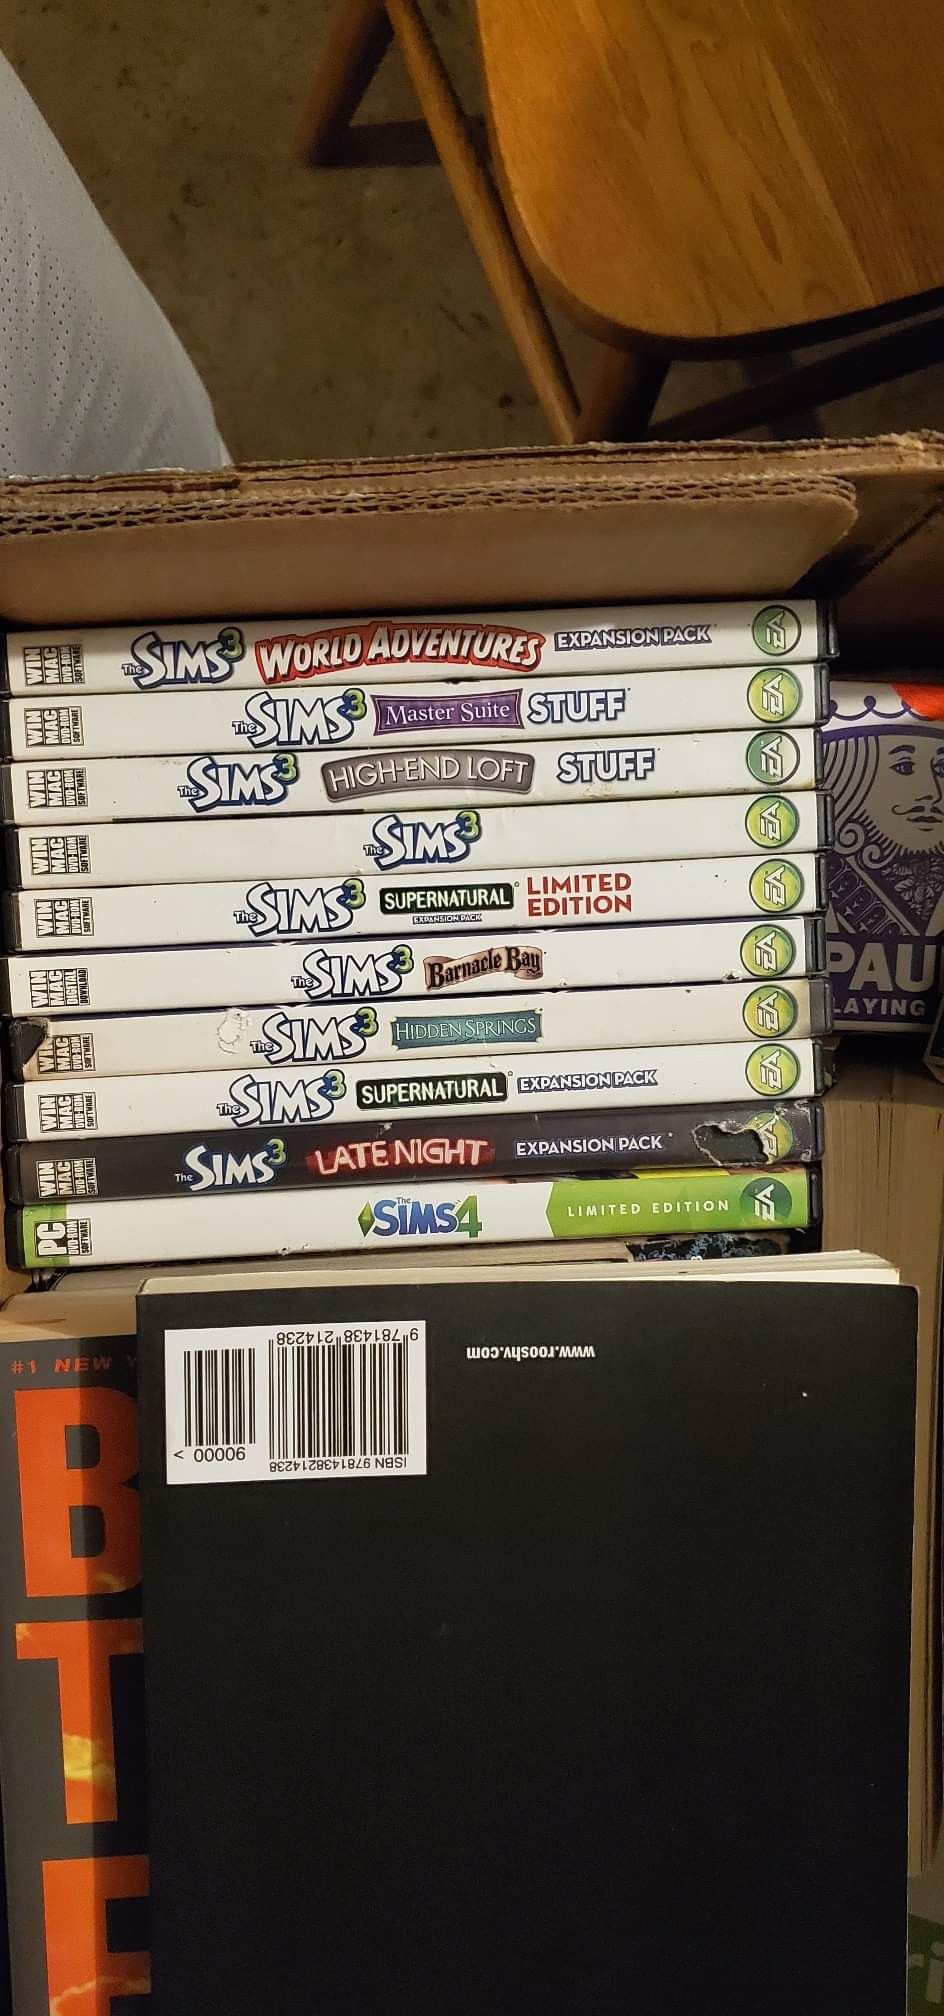 Sims PC games bundle